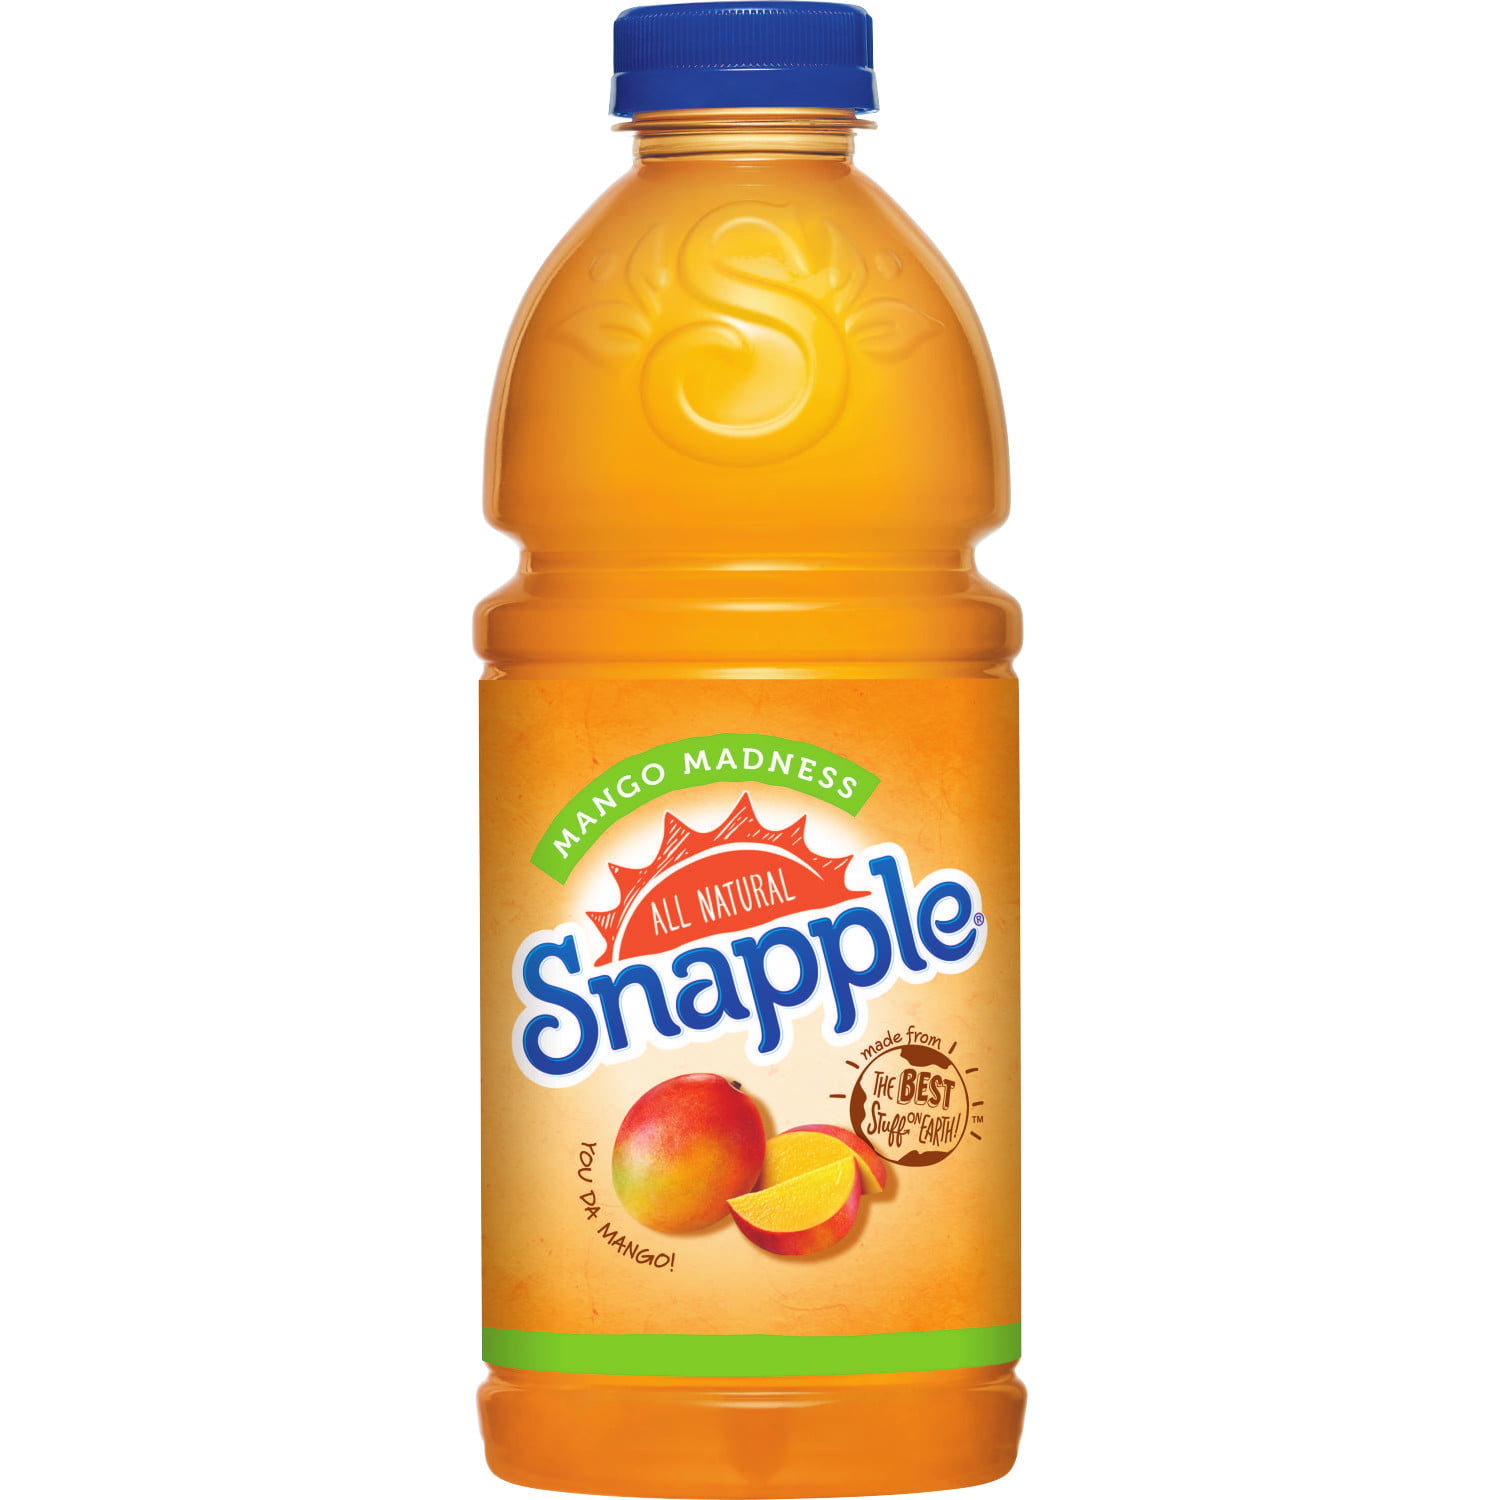 Snapple Mango Madness Juice Drink, 32 Fl Oz Bottle, 1 Count - Walmart ...